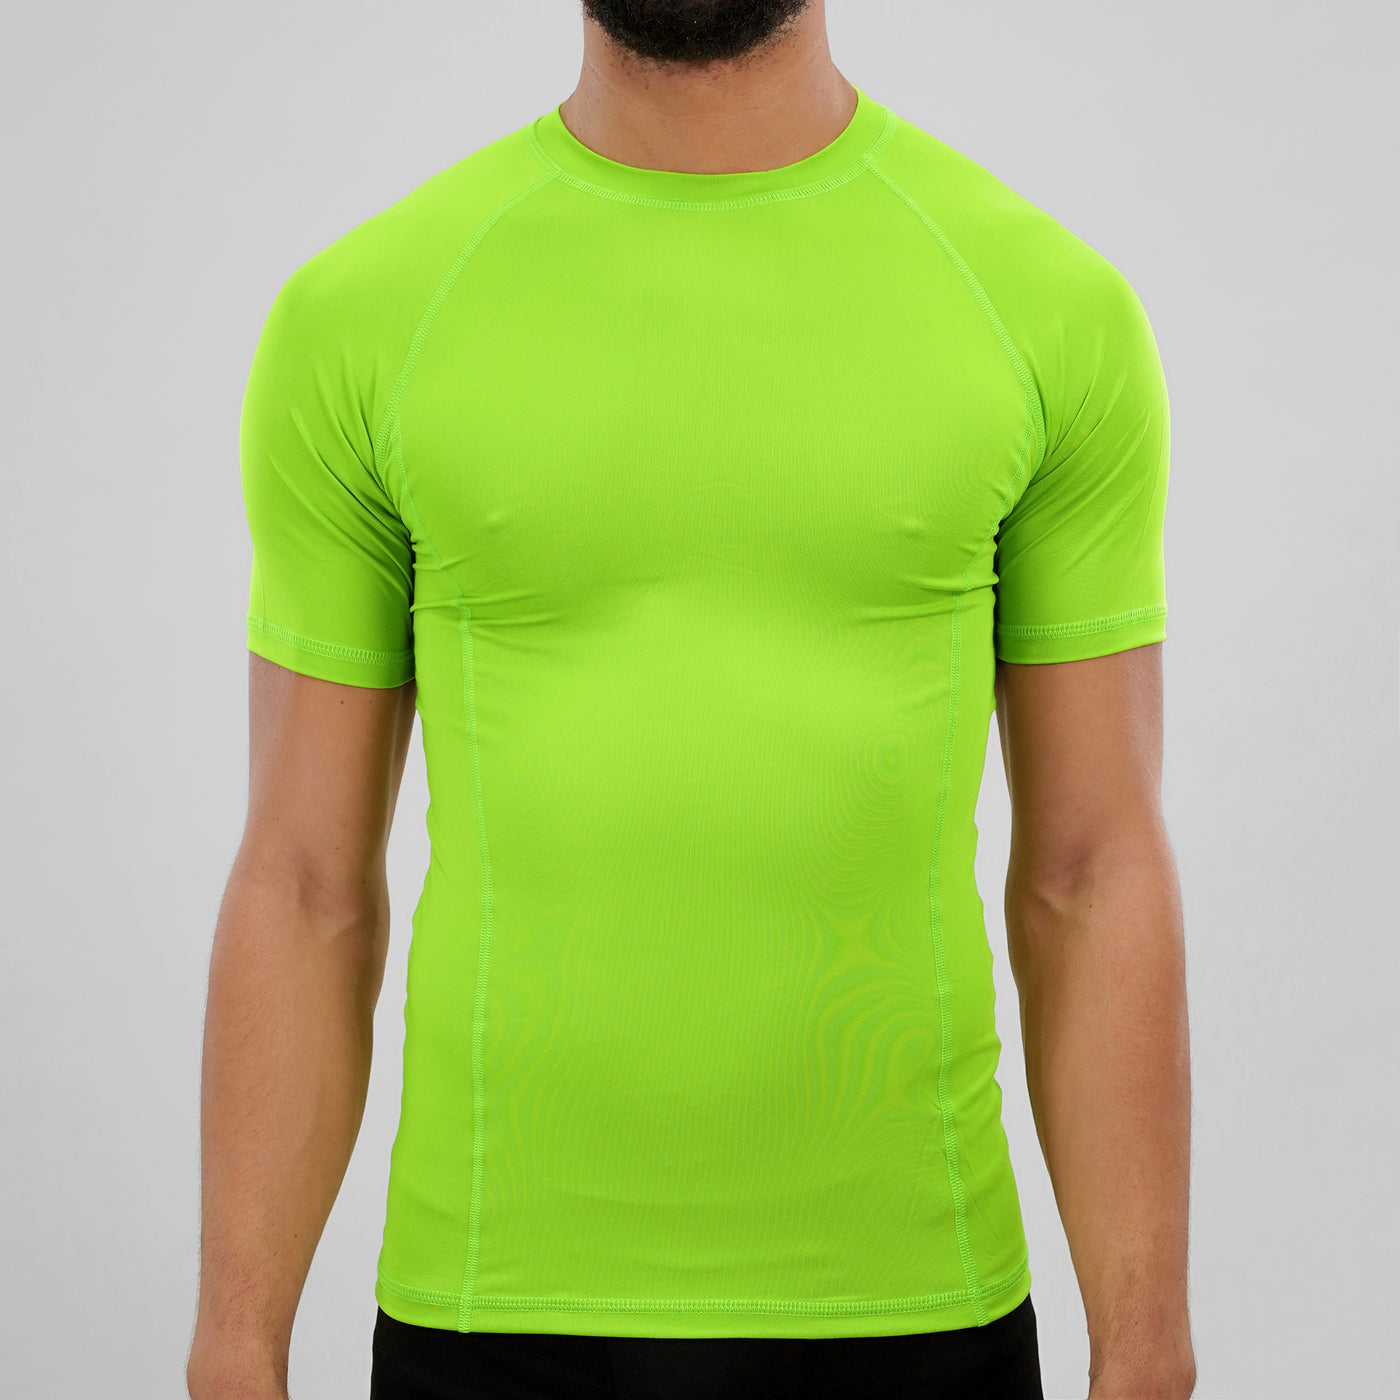 Lizard Green Compression Shirt